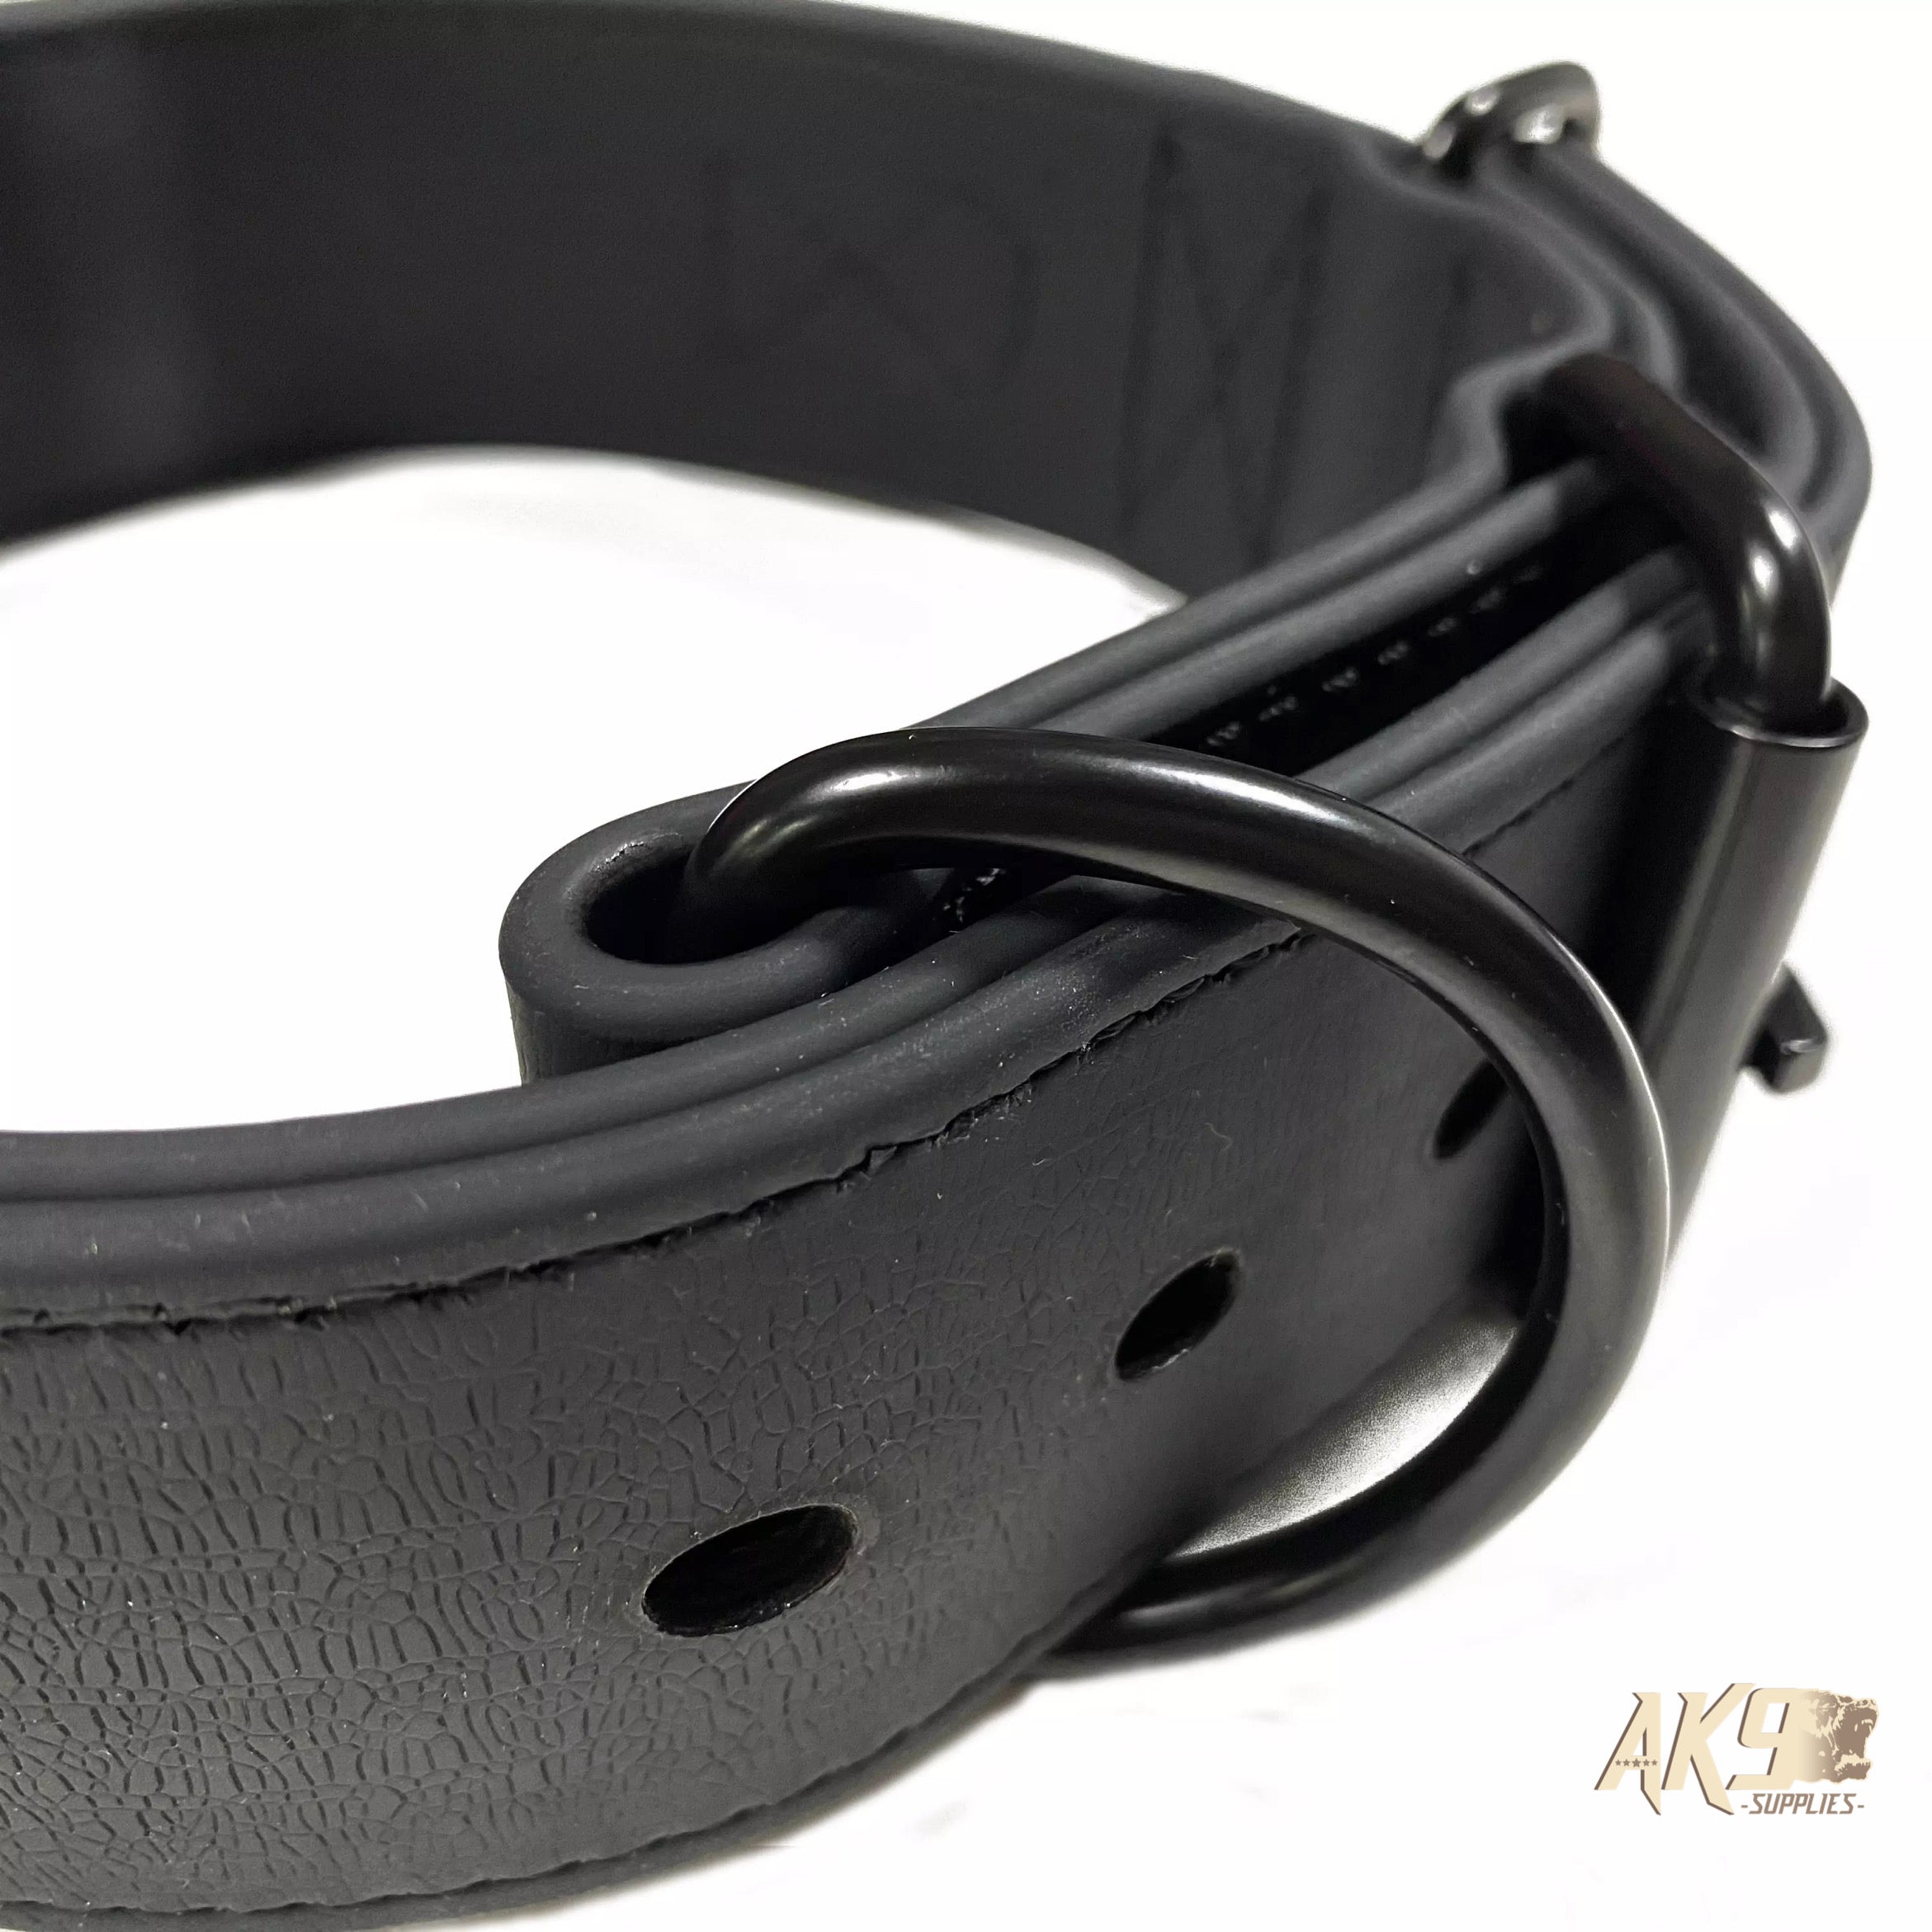 2 inch Biothane Dog Collar - With Handle